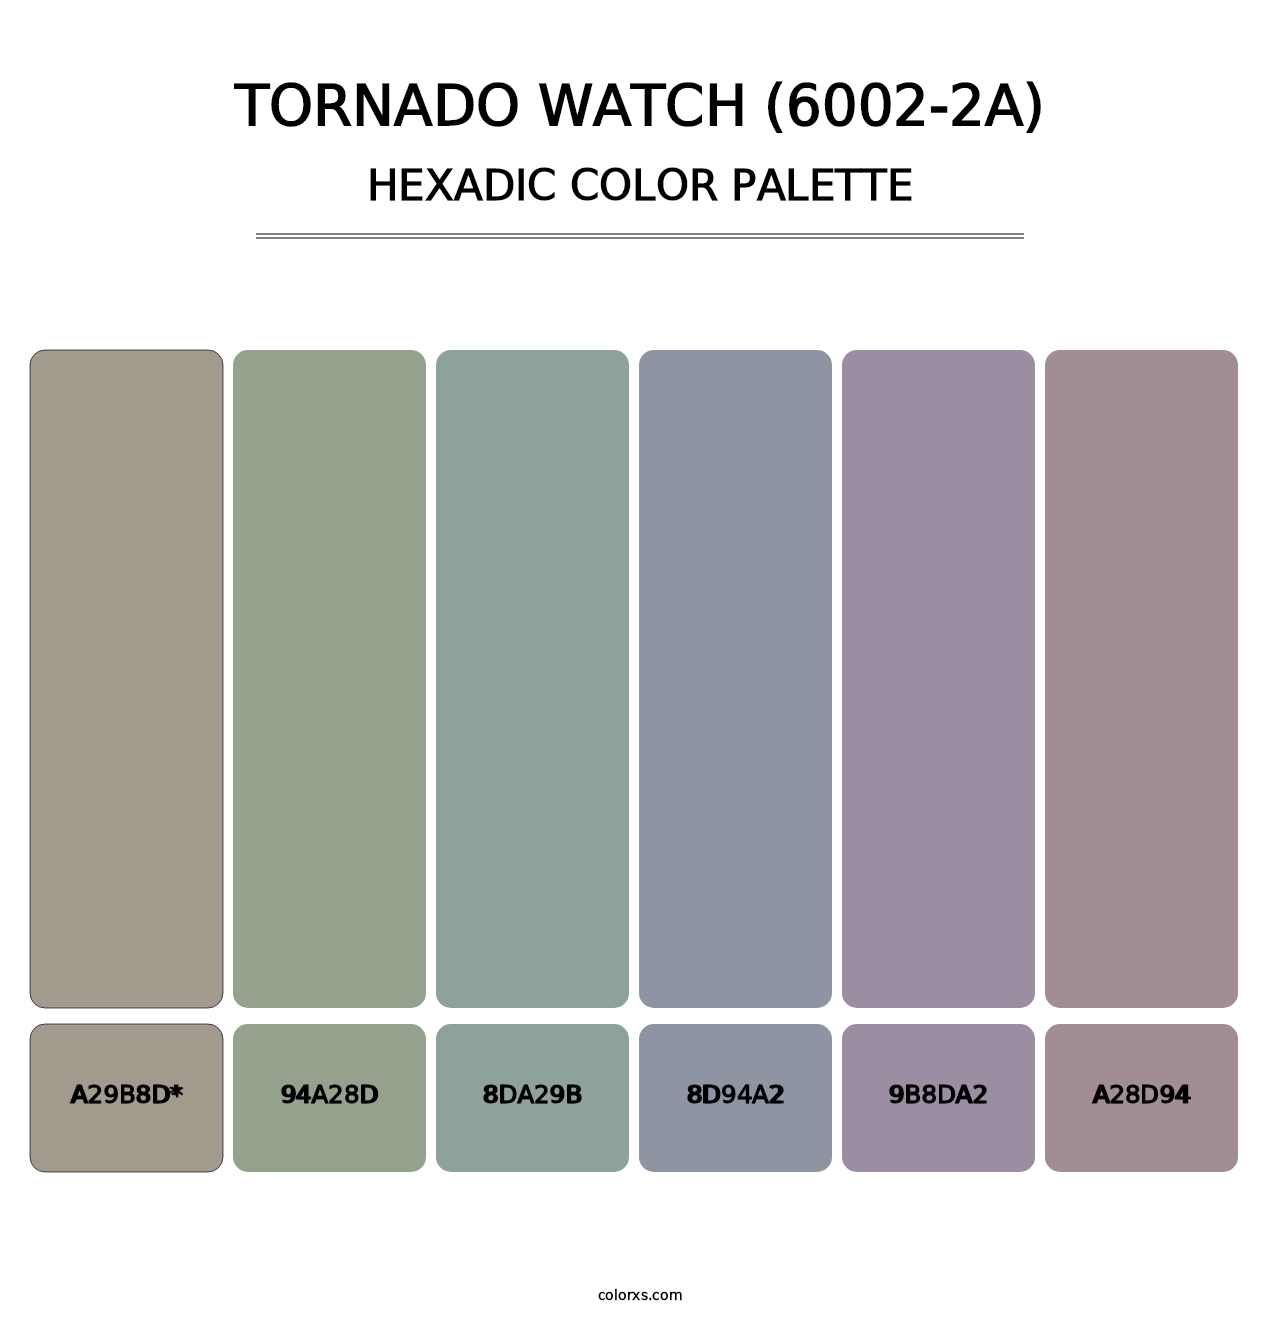 Tornado Watch (6002-2A) - Hexadic Color Palette